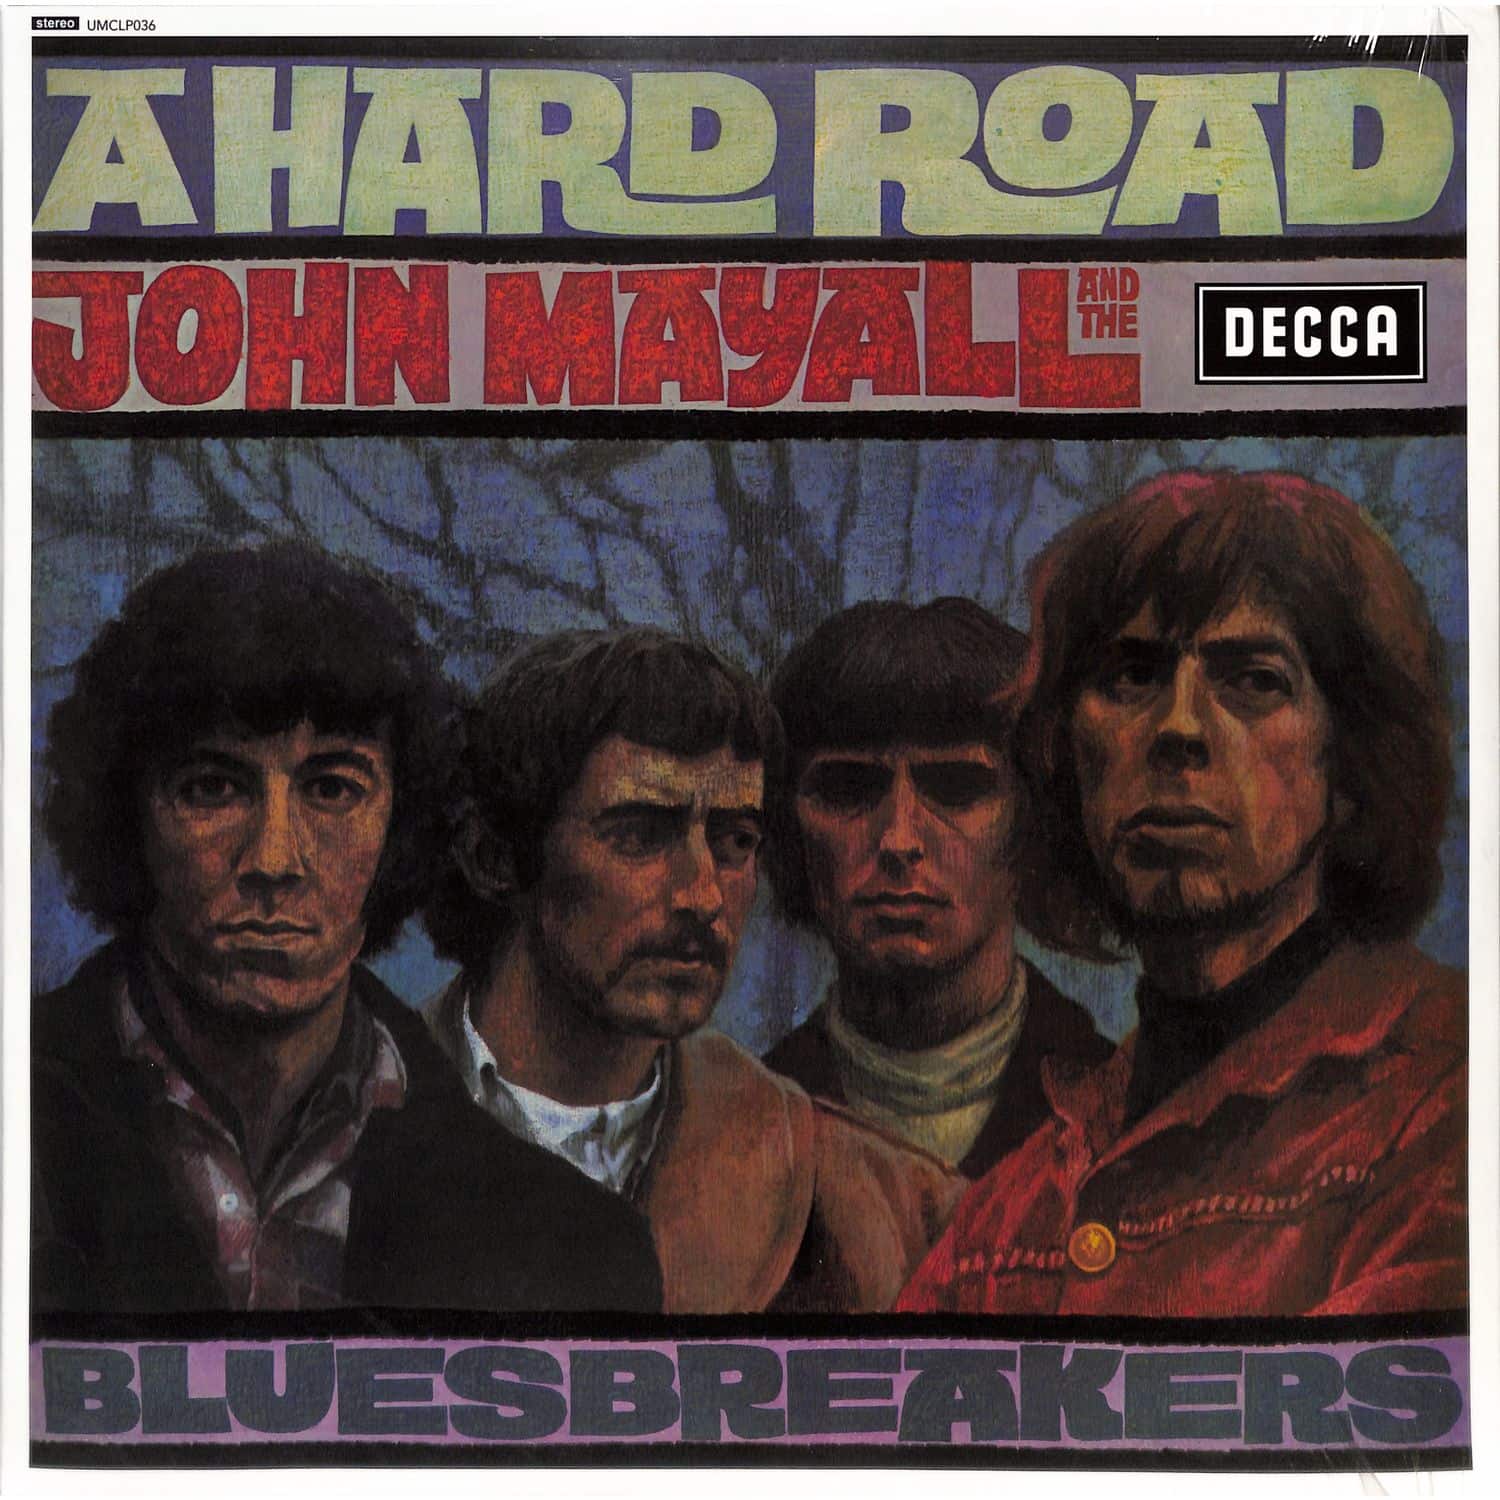 John Mayall & The Bluesbreakers - A HARD ROAD 